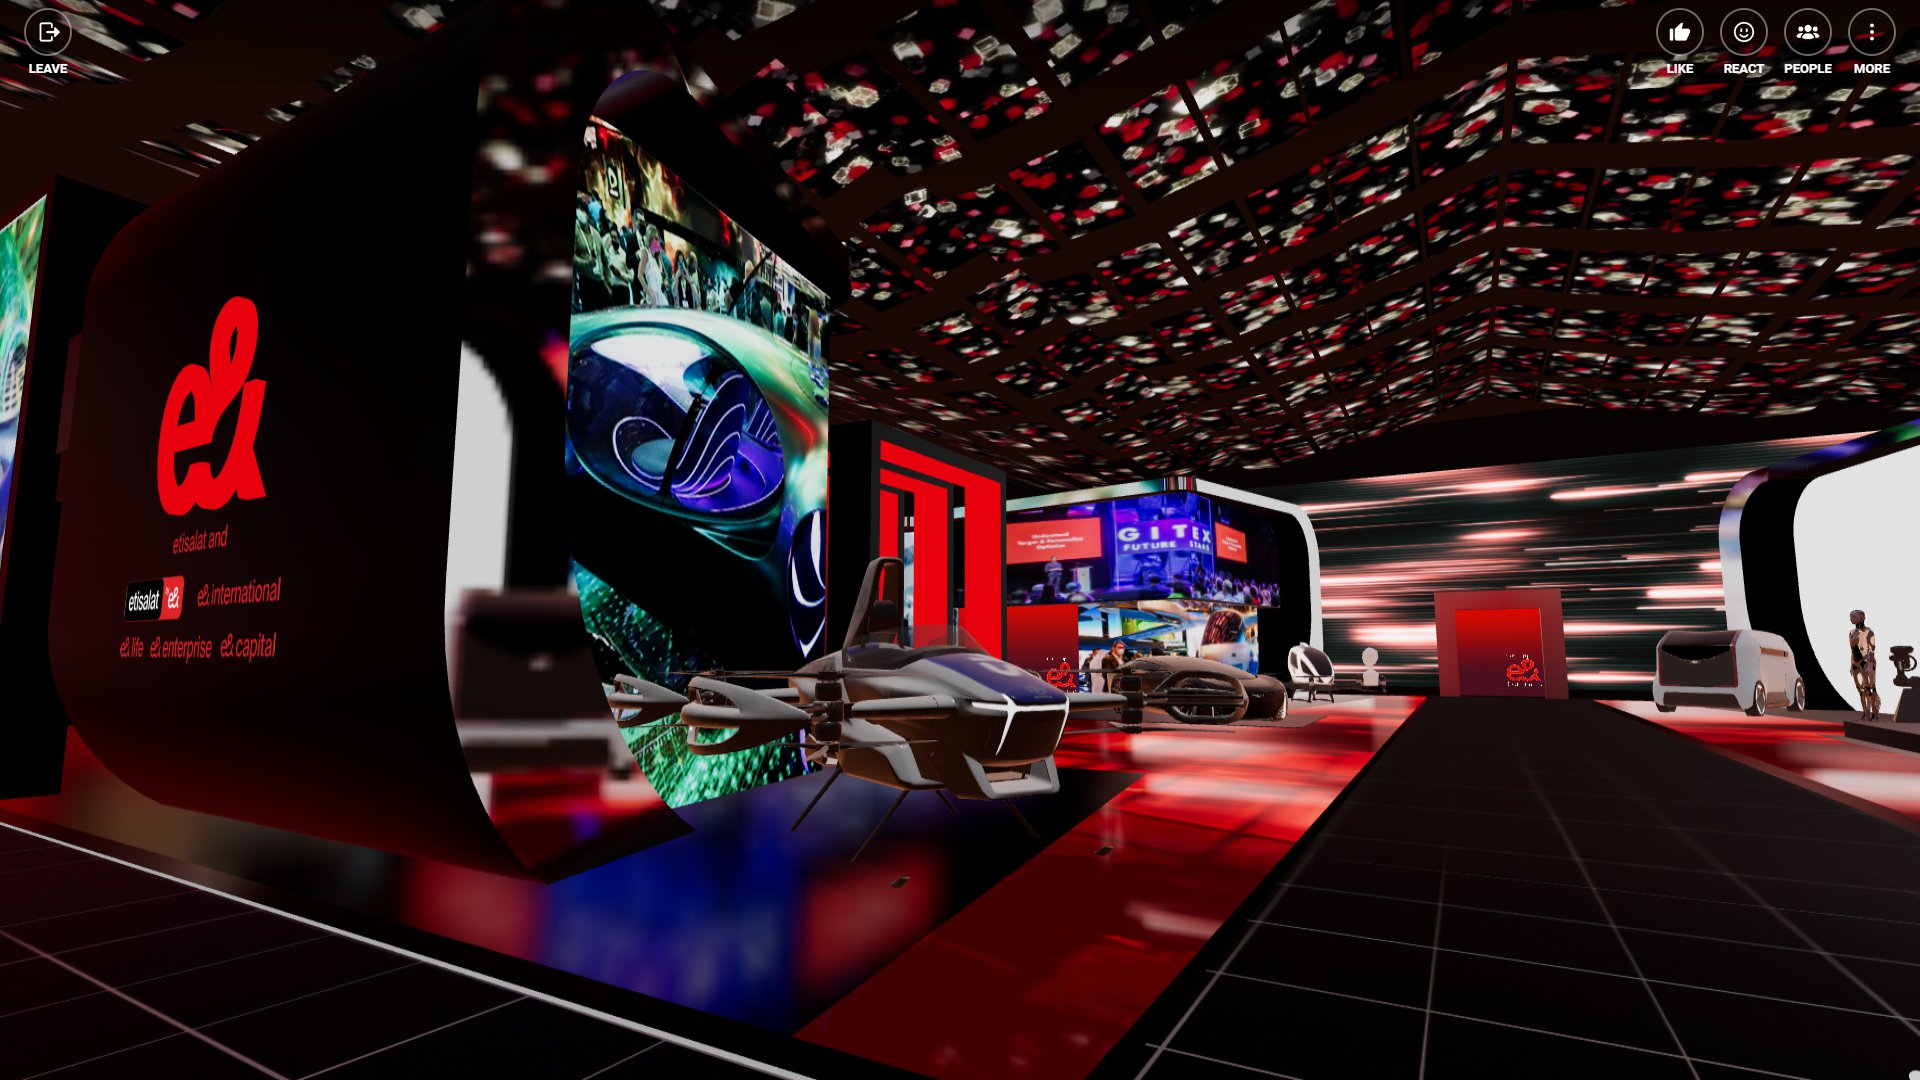 e& universe debiutuje wirtualnie na targach GITEX 2022 w Dubaju, wspierana przez technologie VIVERSE HTC VIVE